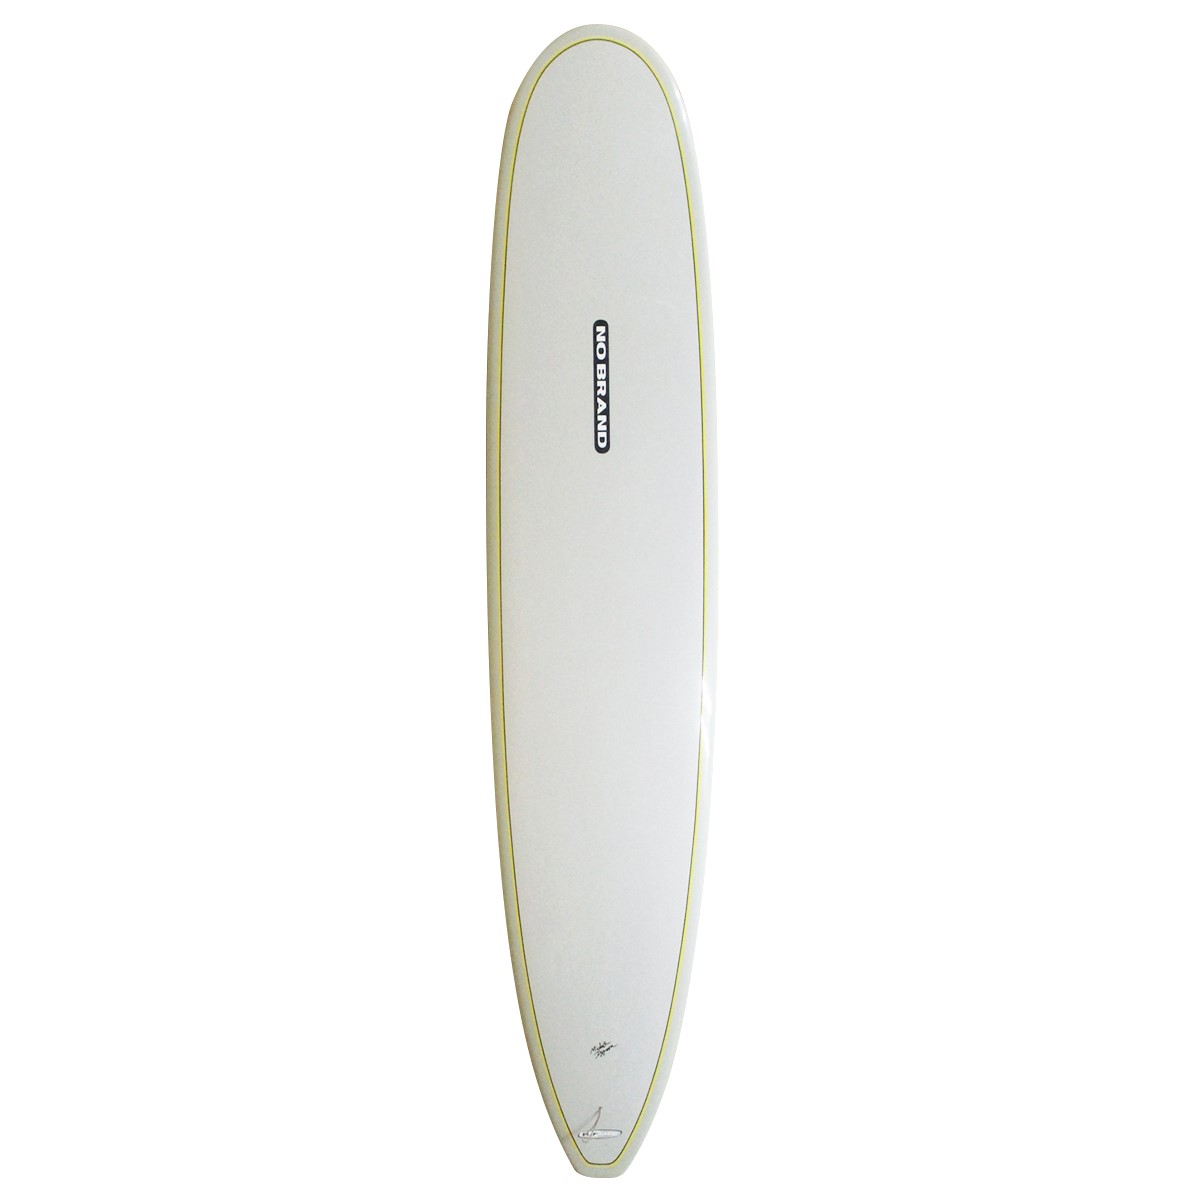 NO BRAND surfboard